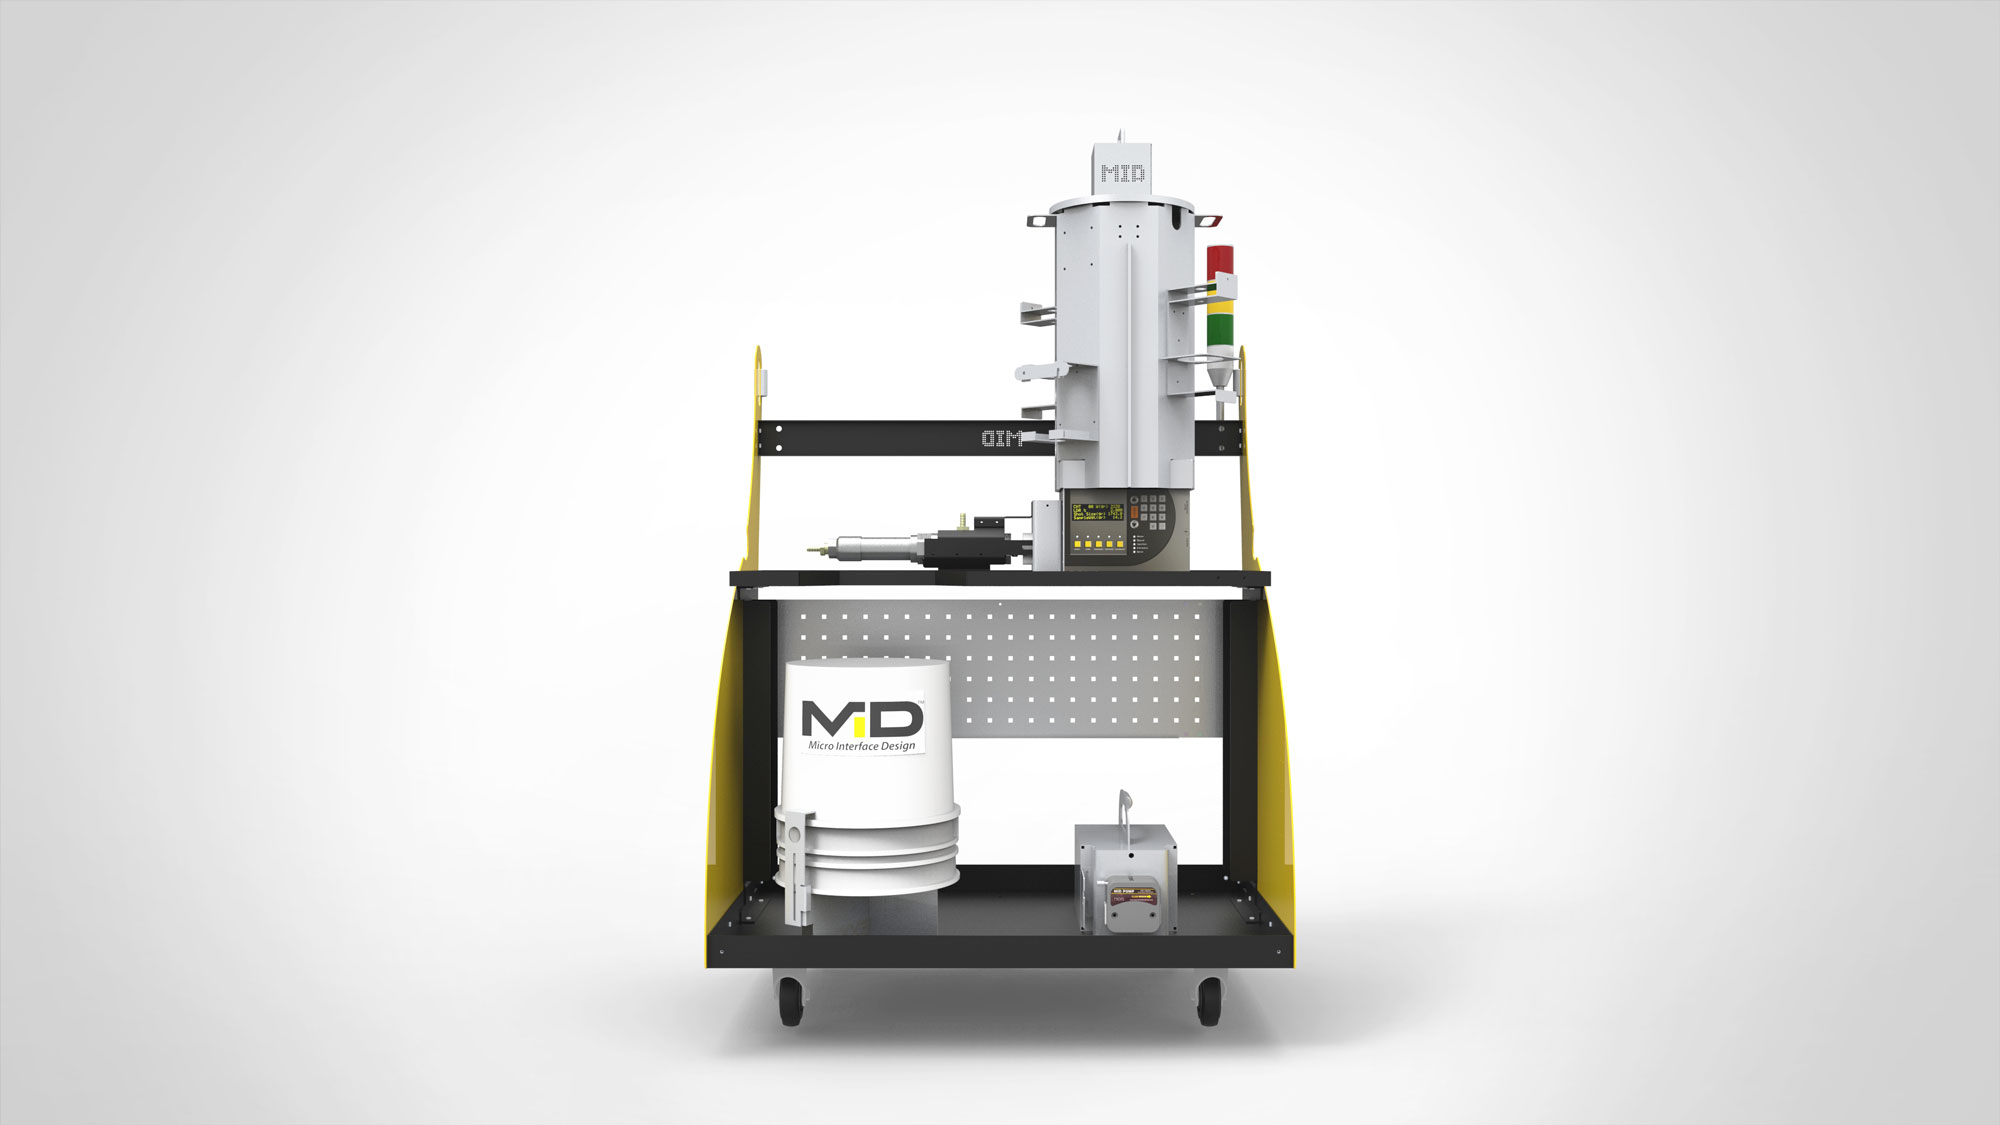 Midexx mobile color cart for continuous gravimetric dispensing of liquid color